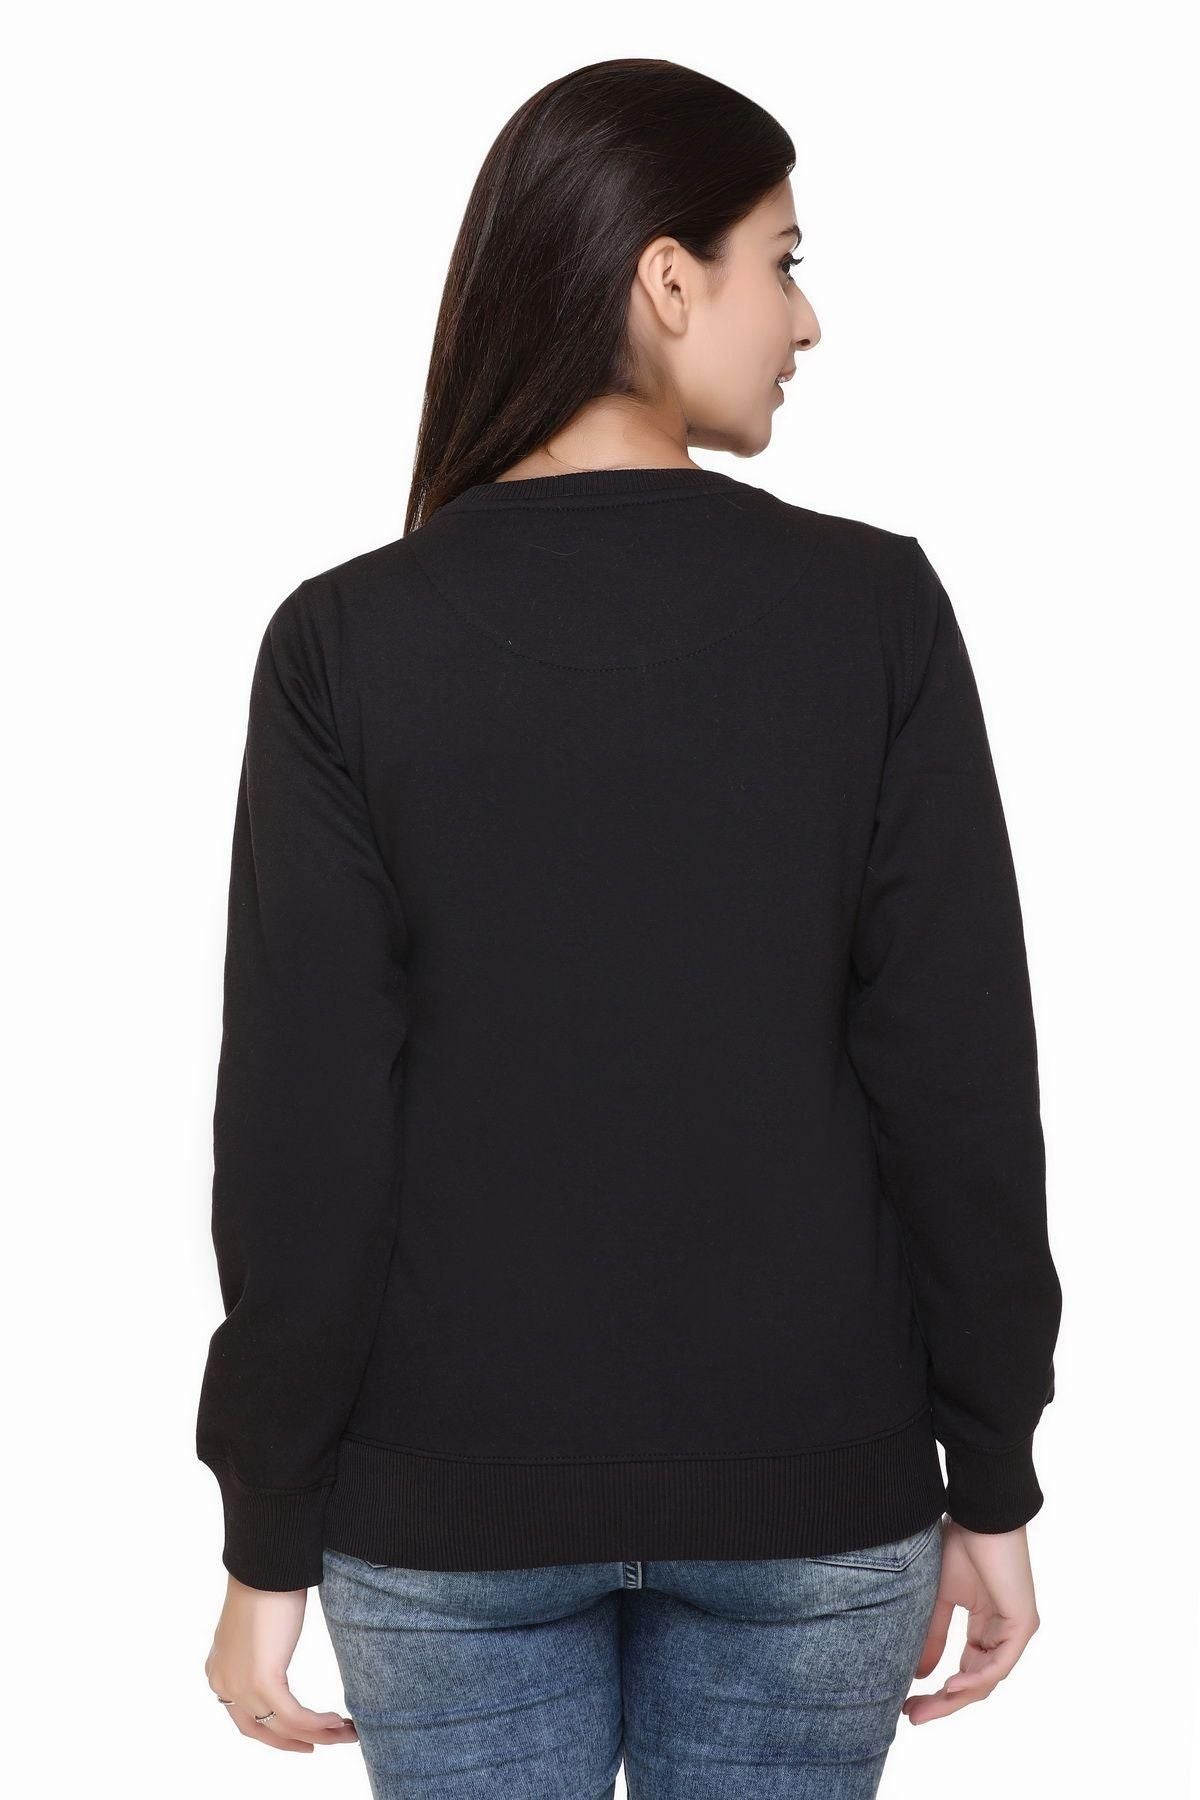 Women's Cotton Fleece Printed Sweatshirts